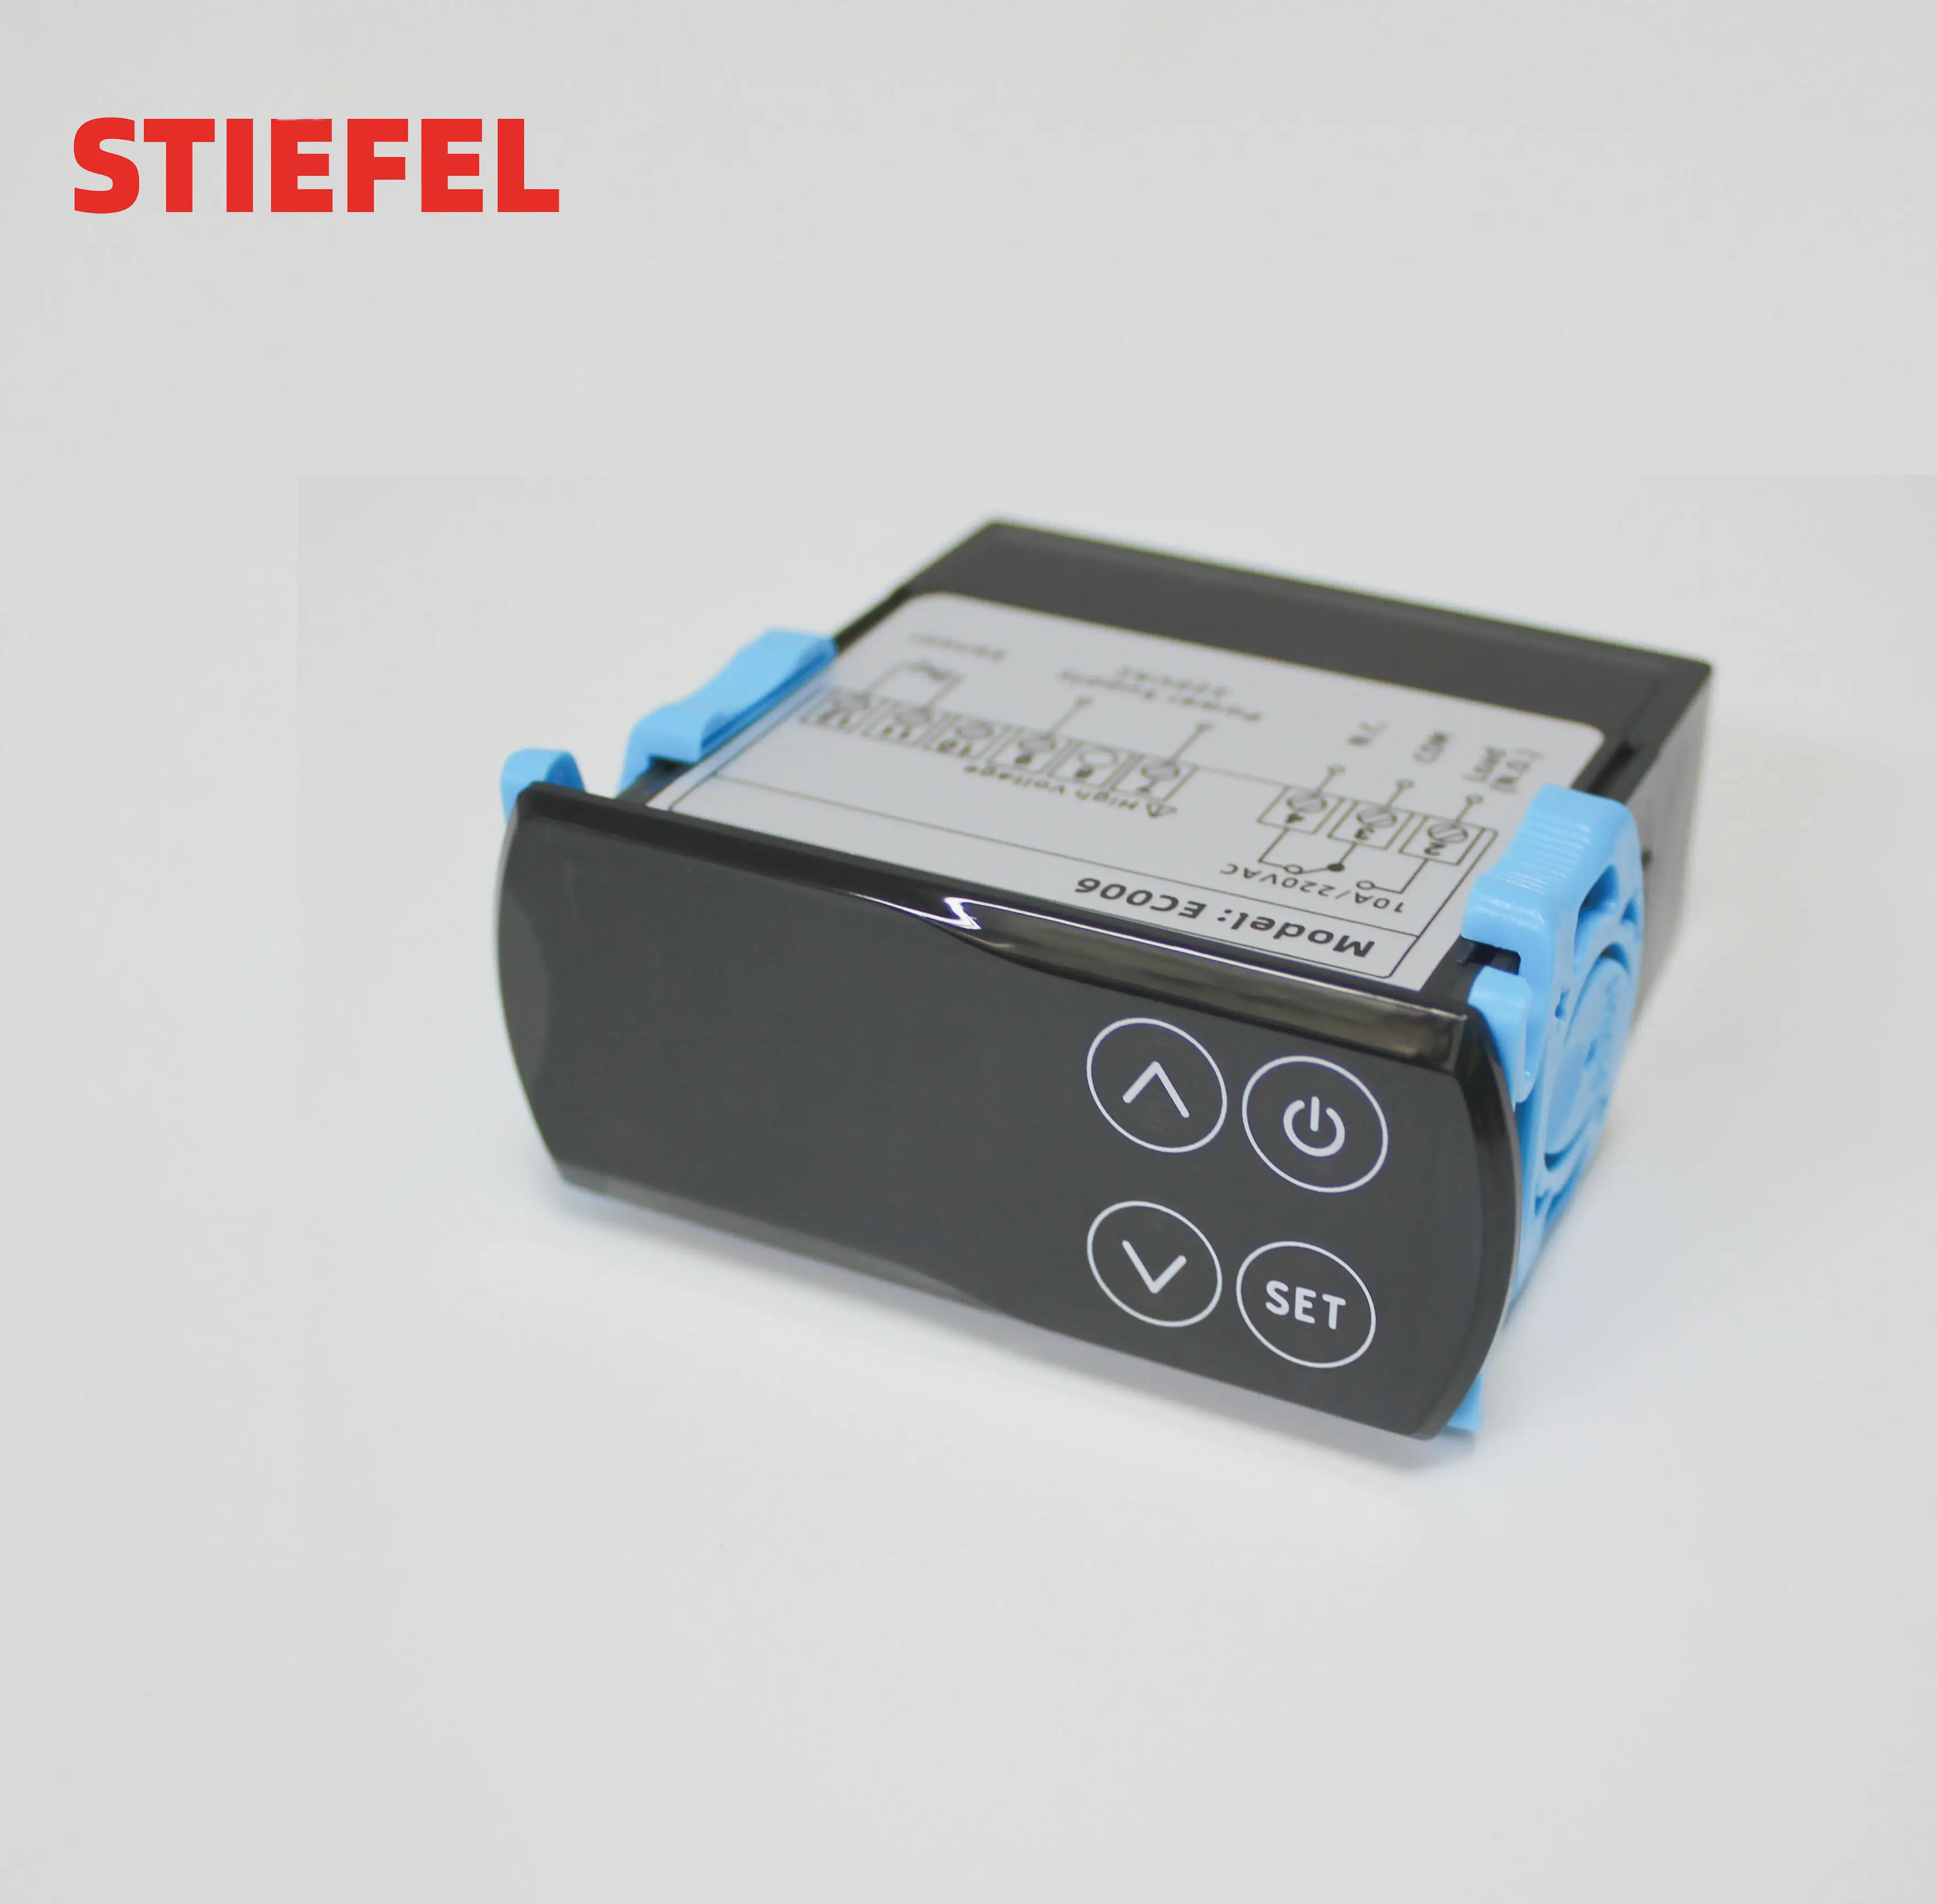 STIEFEL elektronischer temperaturregler 220 V digitaler touchscreen-heiz- und kühltemperaturregler